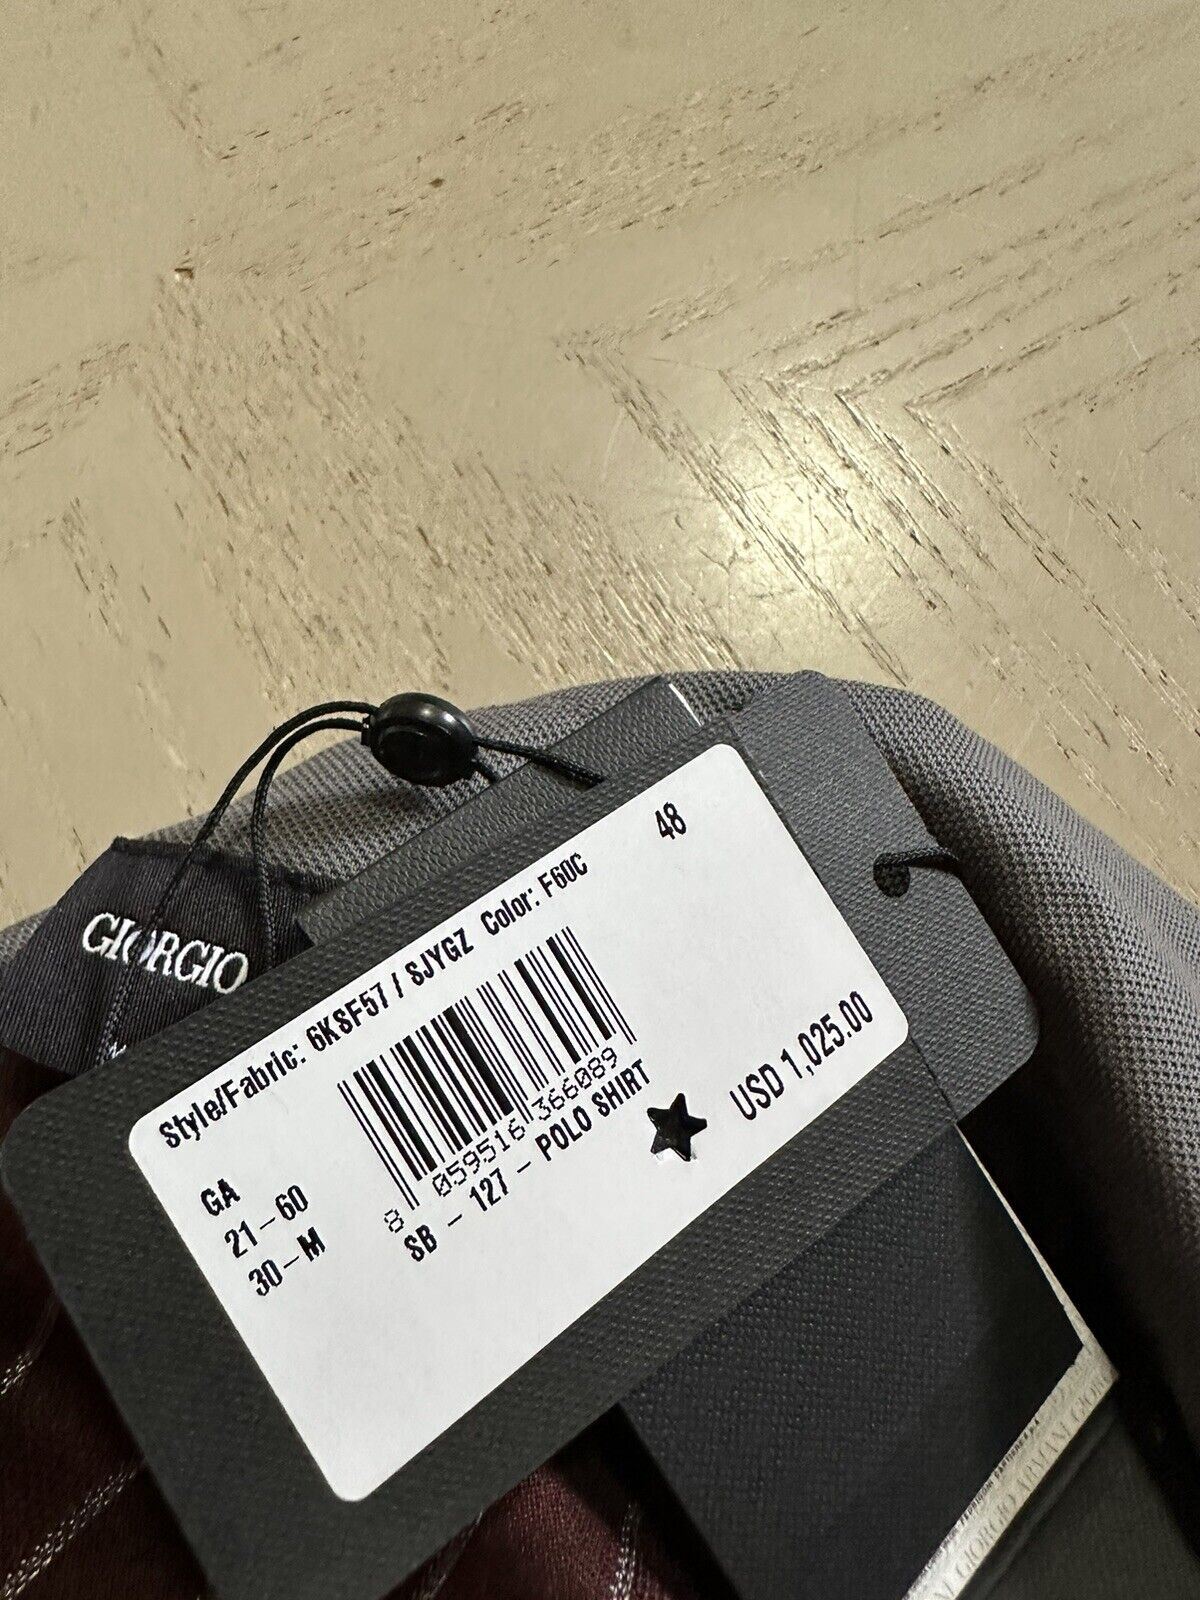 NWT $1025 Мужская шелковая футболка Giorgio Armani бордового цвета 38 США/48 ЕС (S) Италия